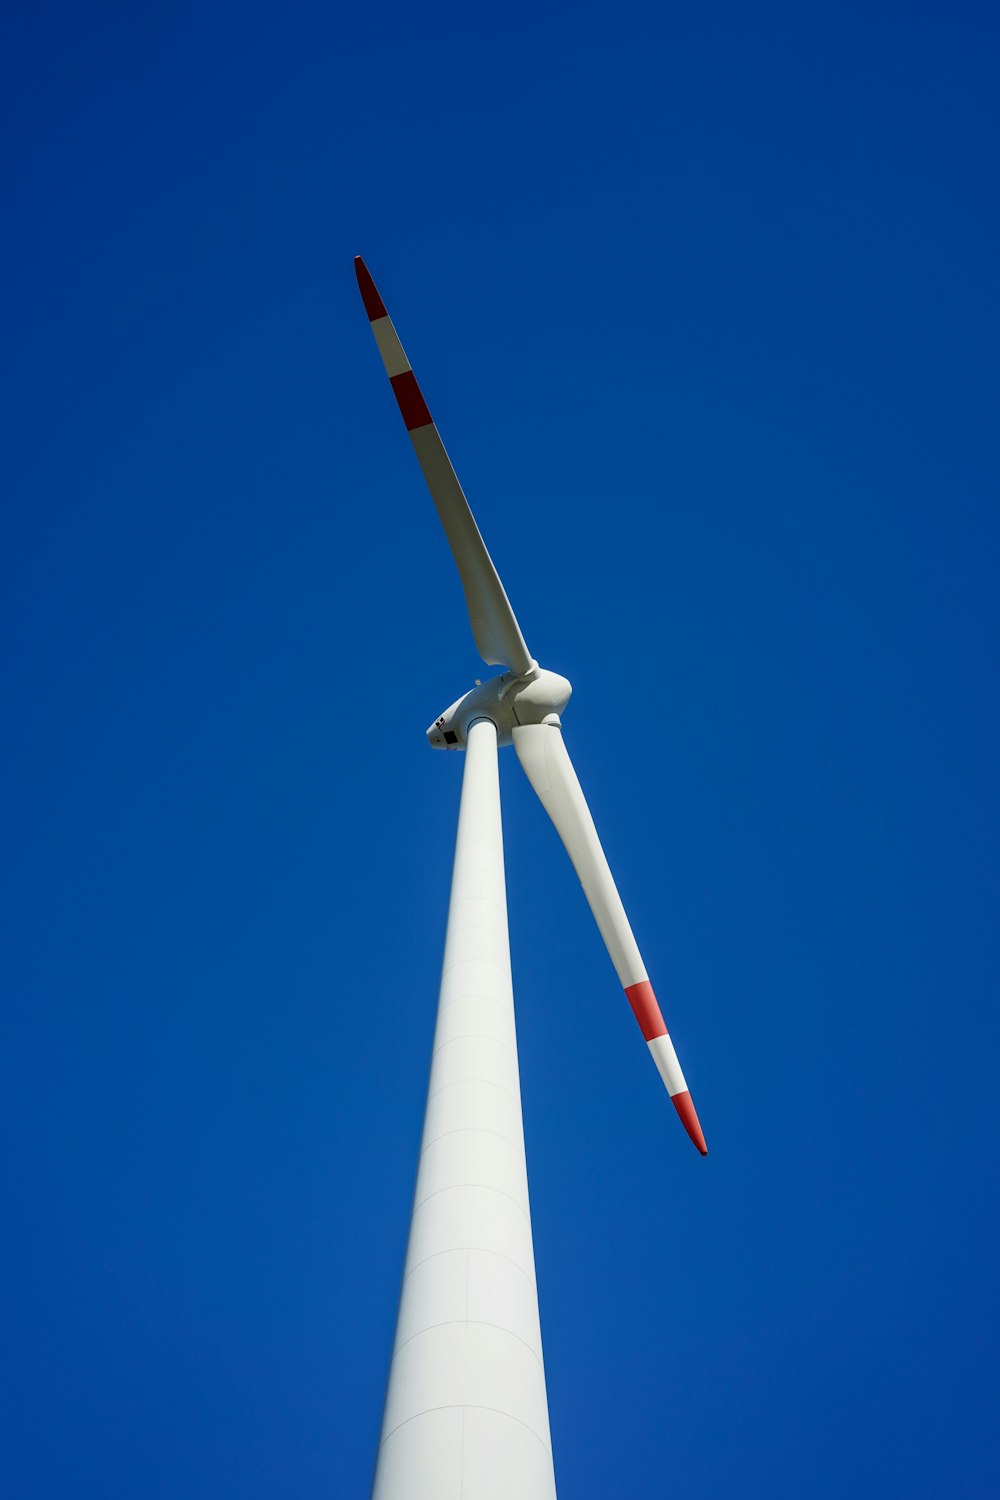 a large white wind turbine against a blue sky